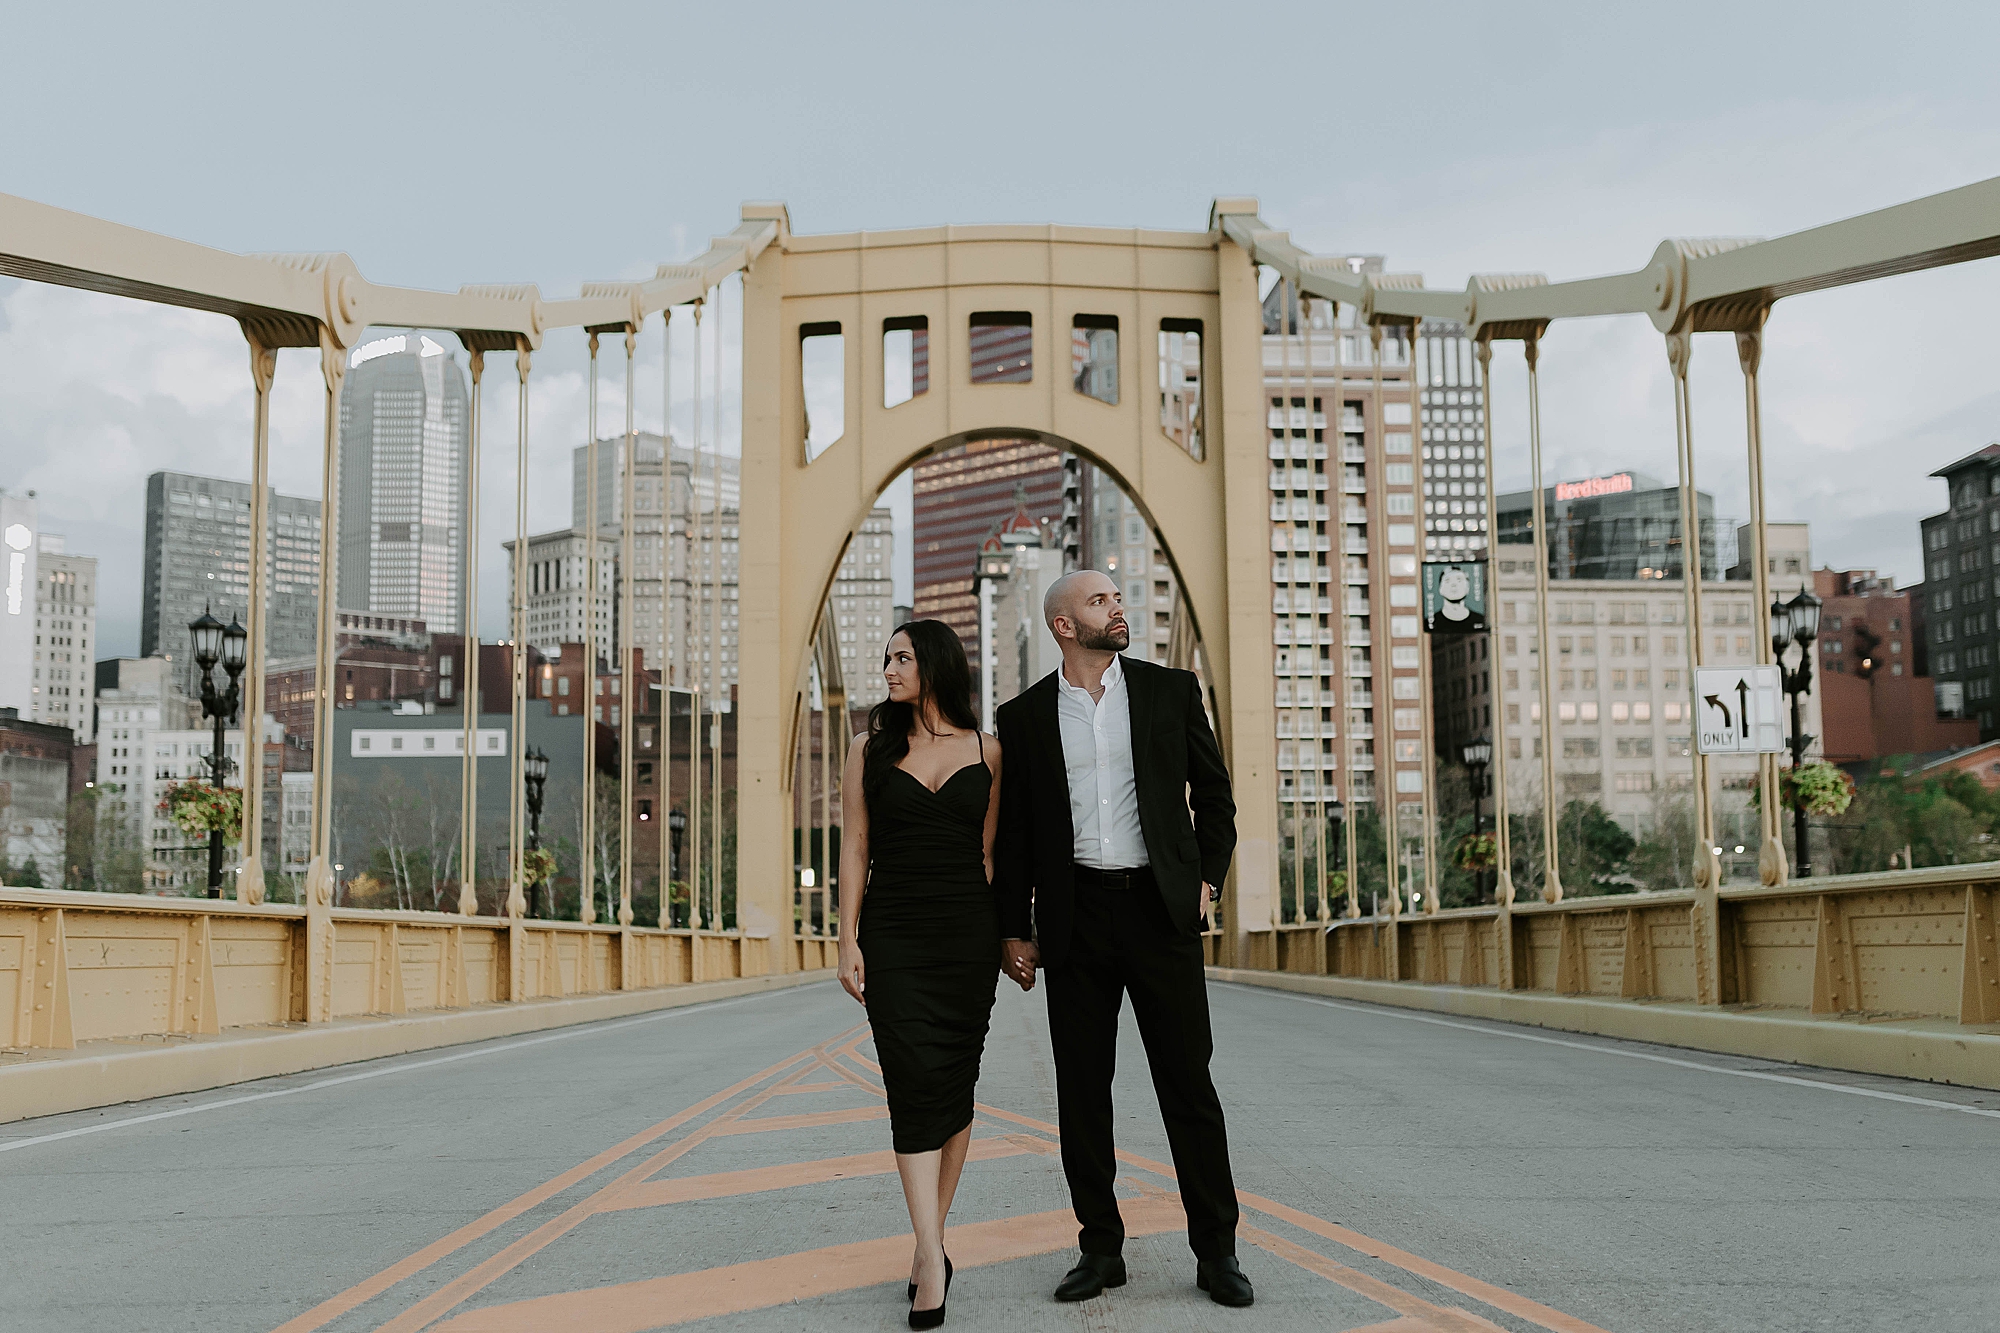 engagement photo ideas, Roberto Clemente Bridge 6th Street Bridge Pittsburgh